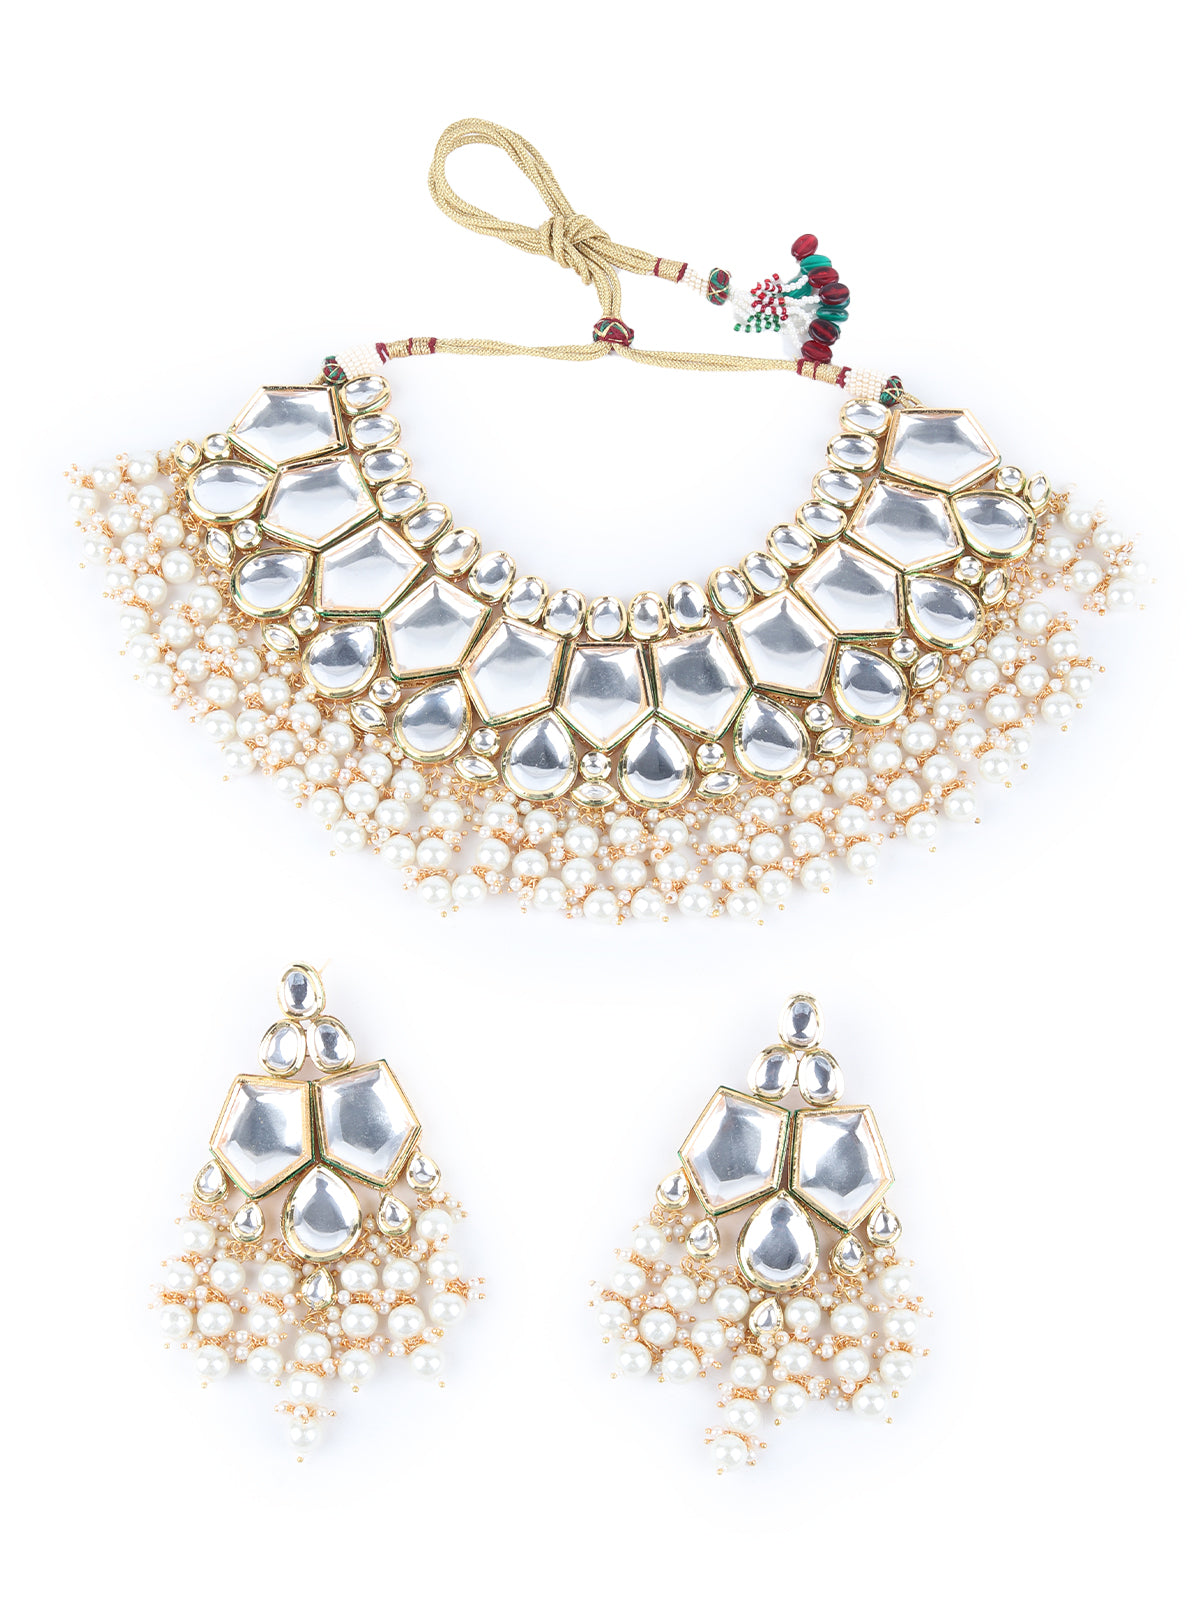 Odette White Beads And Kundan Embellished Choker Set For Women